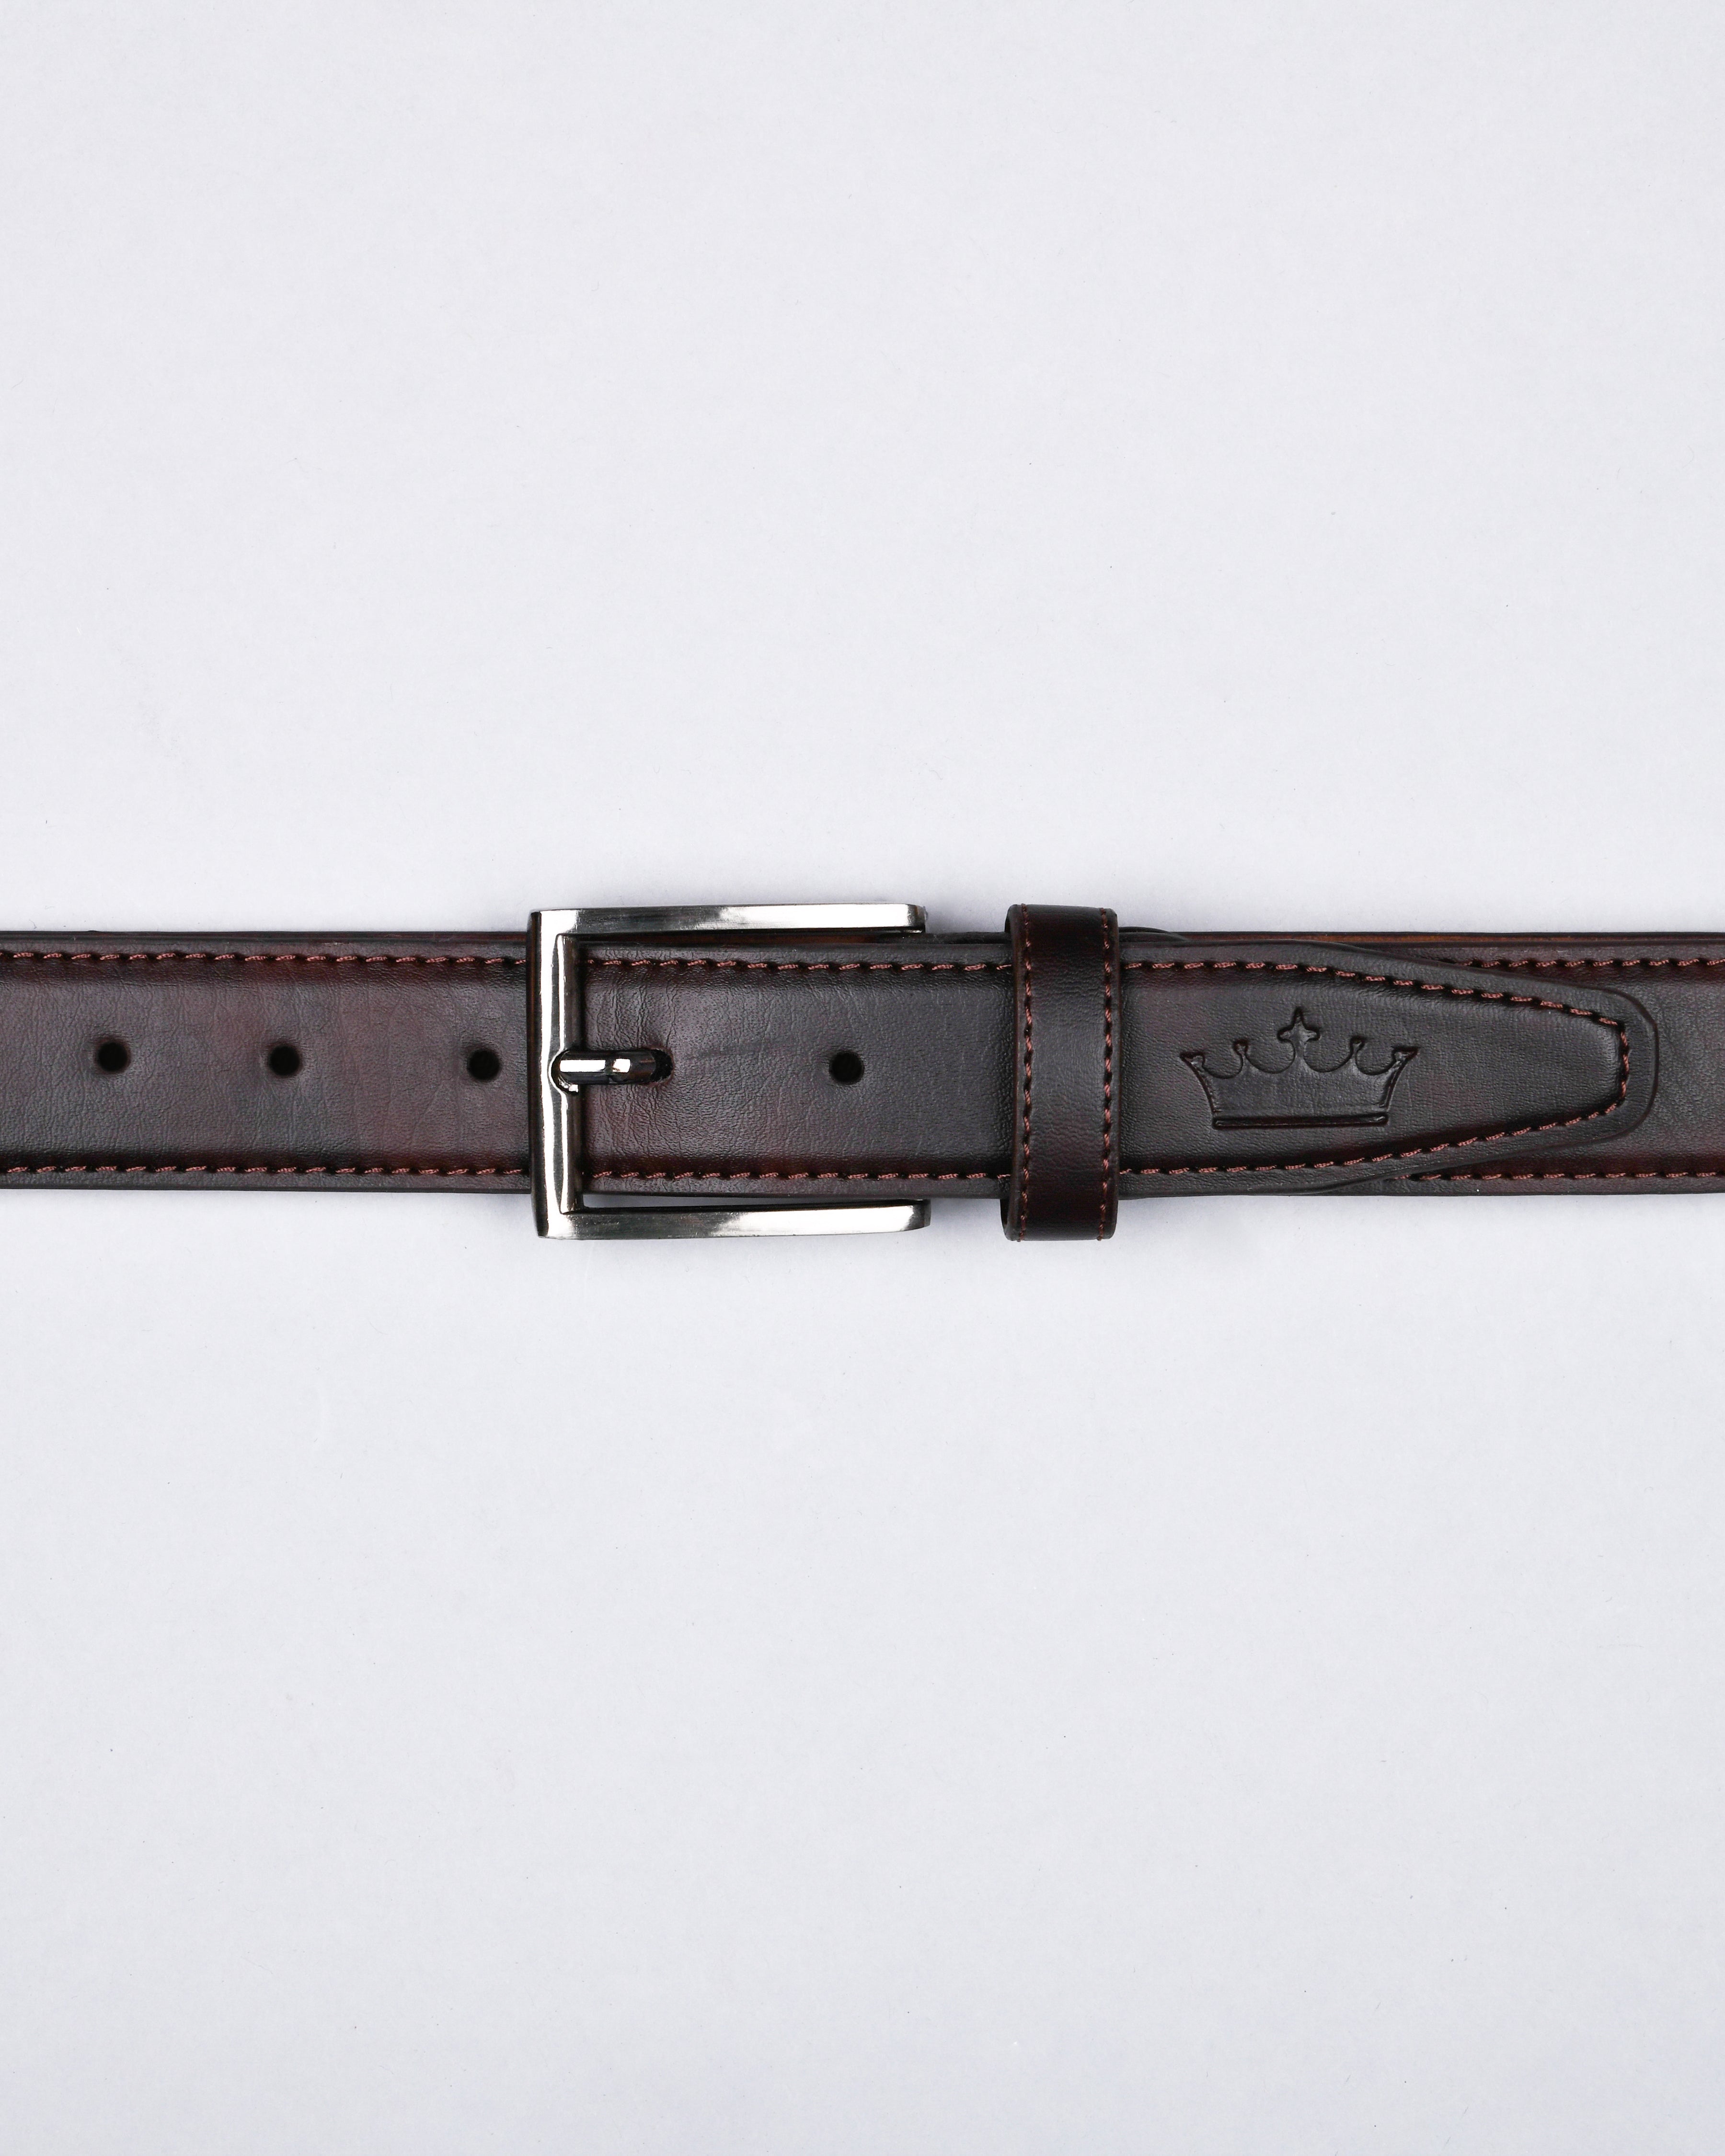 Brown with tan tie dye Patterned Vegan Leather Handcrafted Belt BT10-30, BT10-32, BT10-34, BT10-36, BT10-28, BT10-38